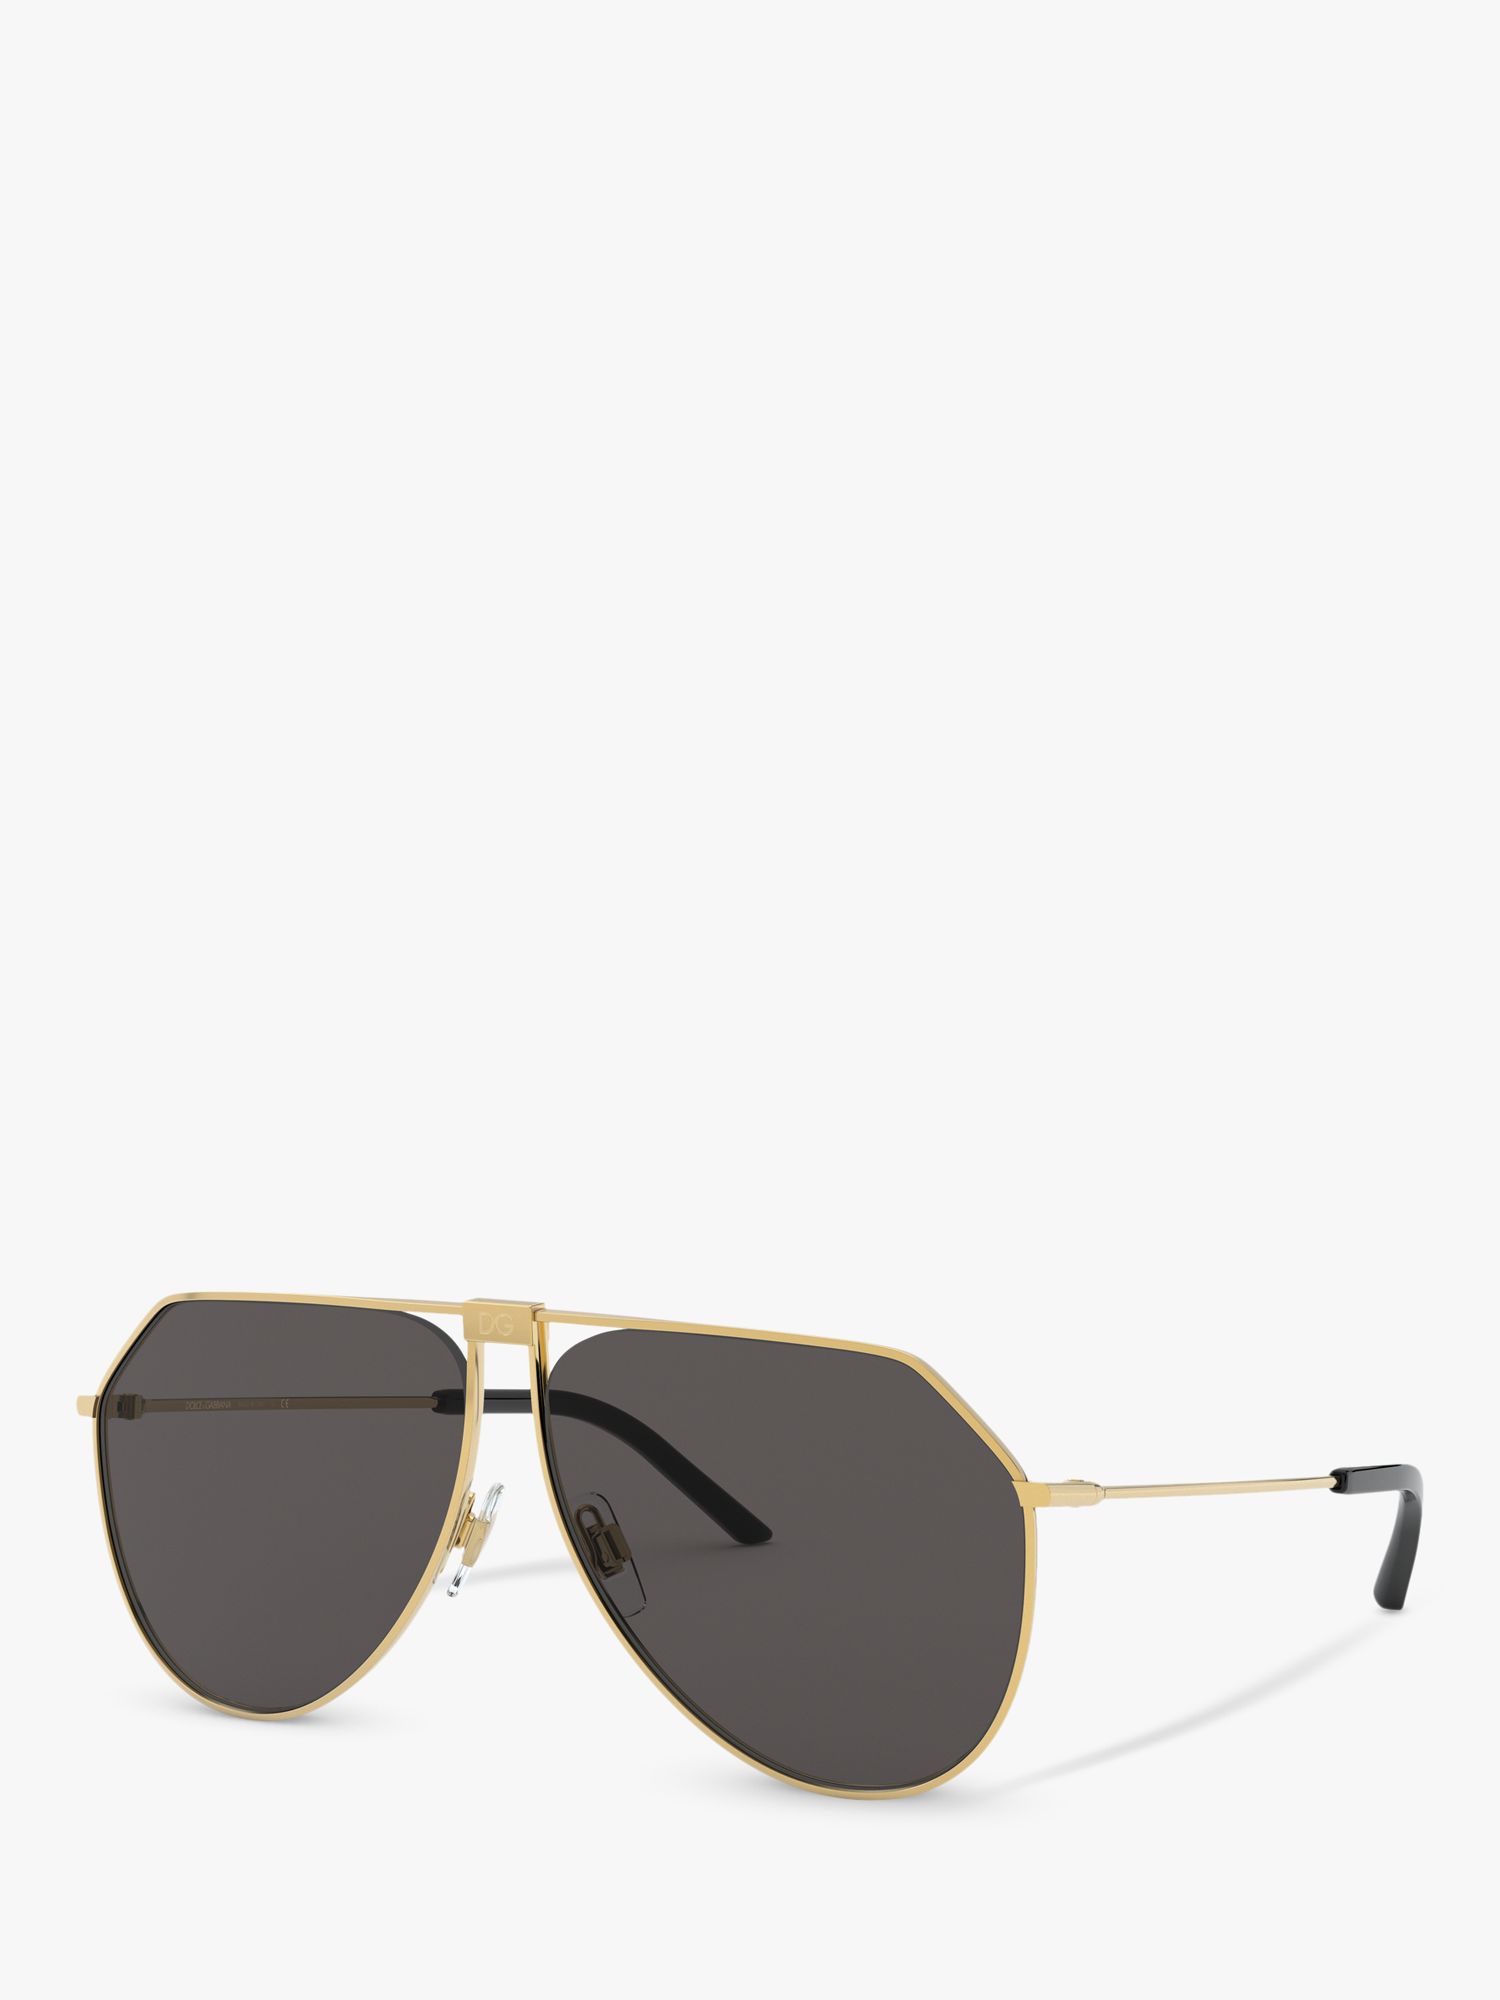 Dolce & Gabbana DG2248 Men's Aviator Sunglasses, Gold/Grey at John ...